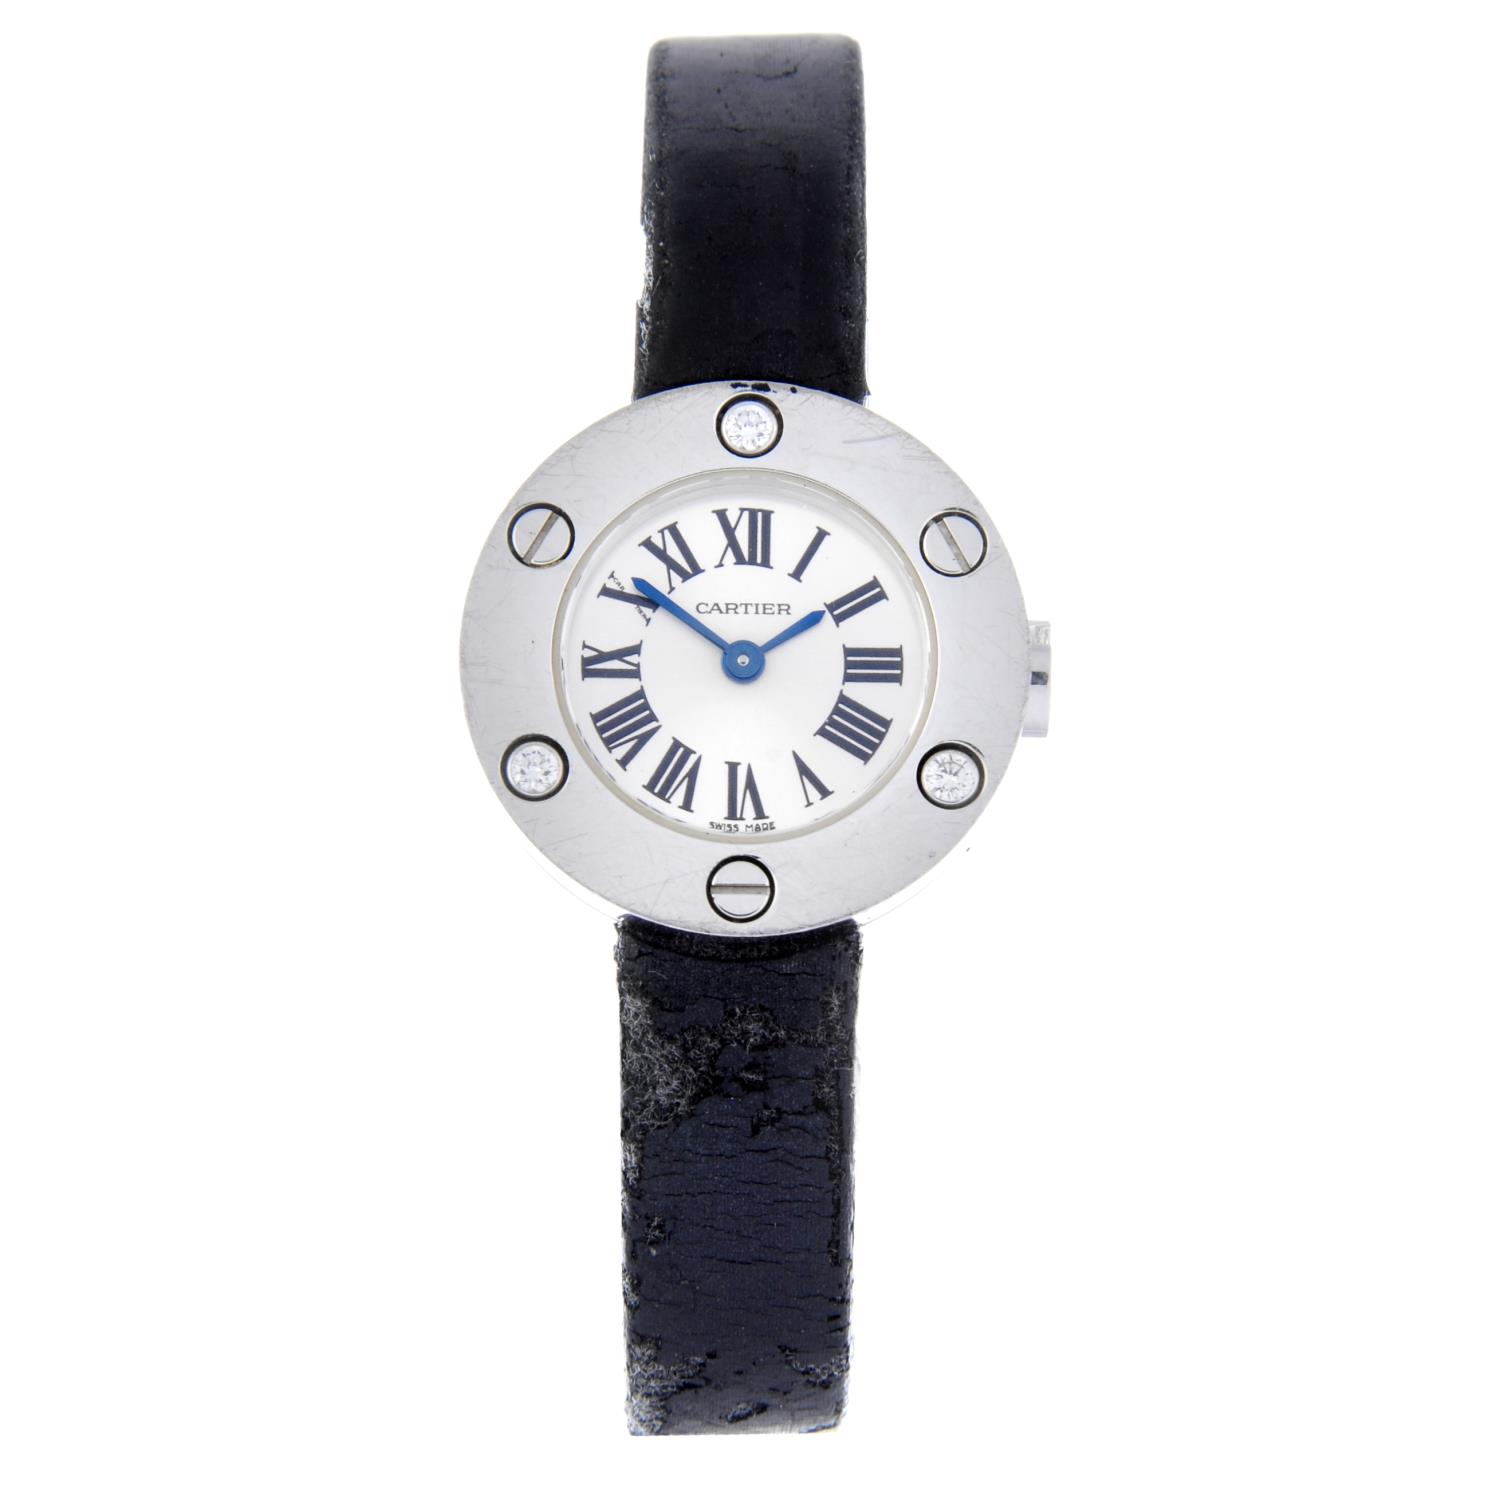 CARTIER - a lady's Love wrist watch.